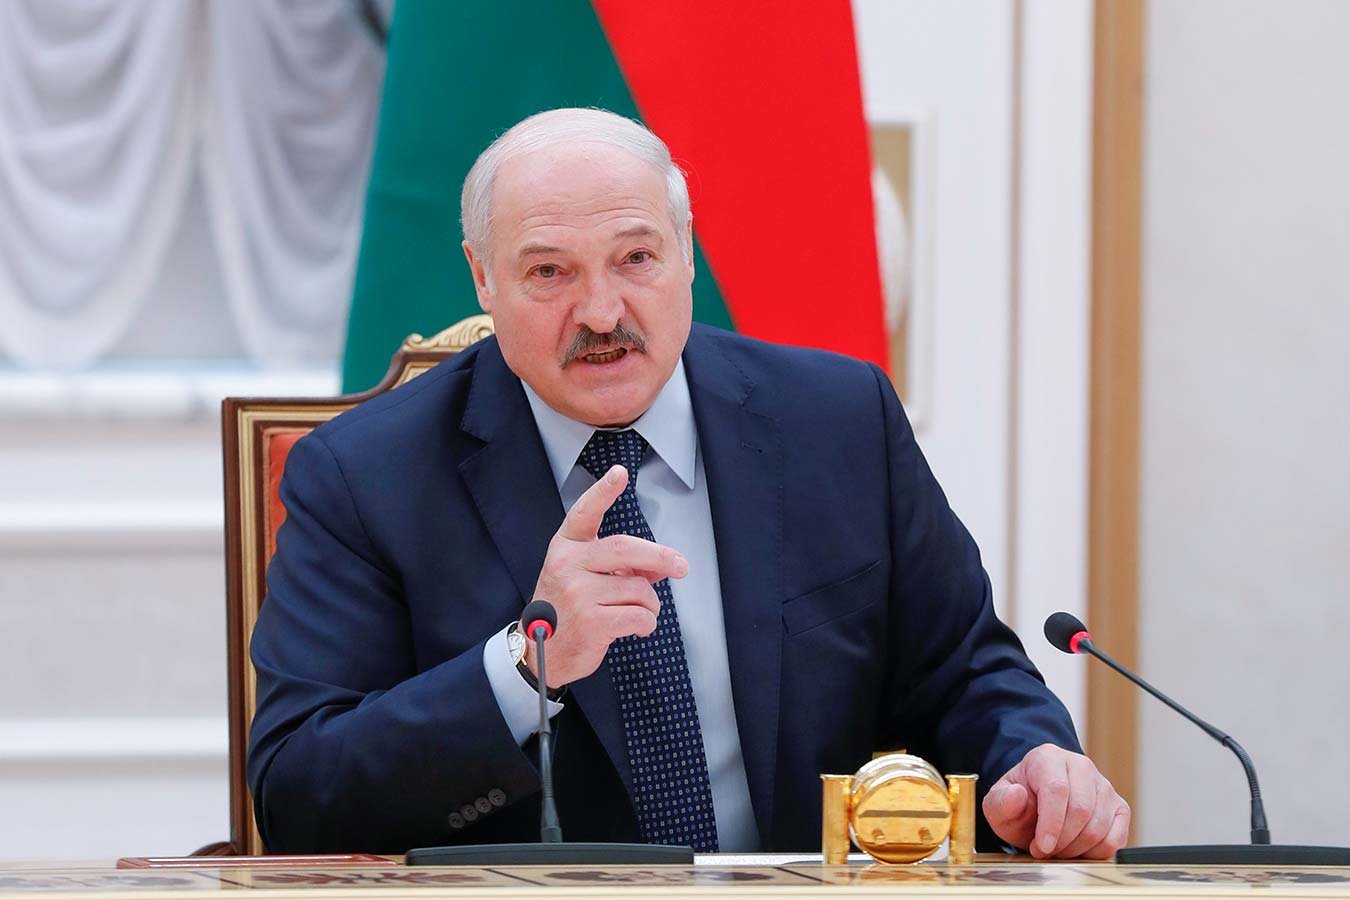 Александр Лукашенко назвал убожеством футбол в Беларуси